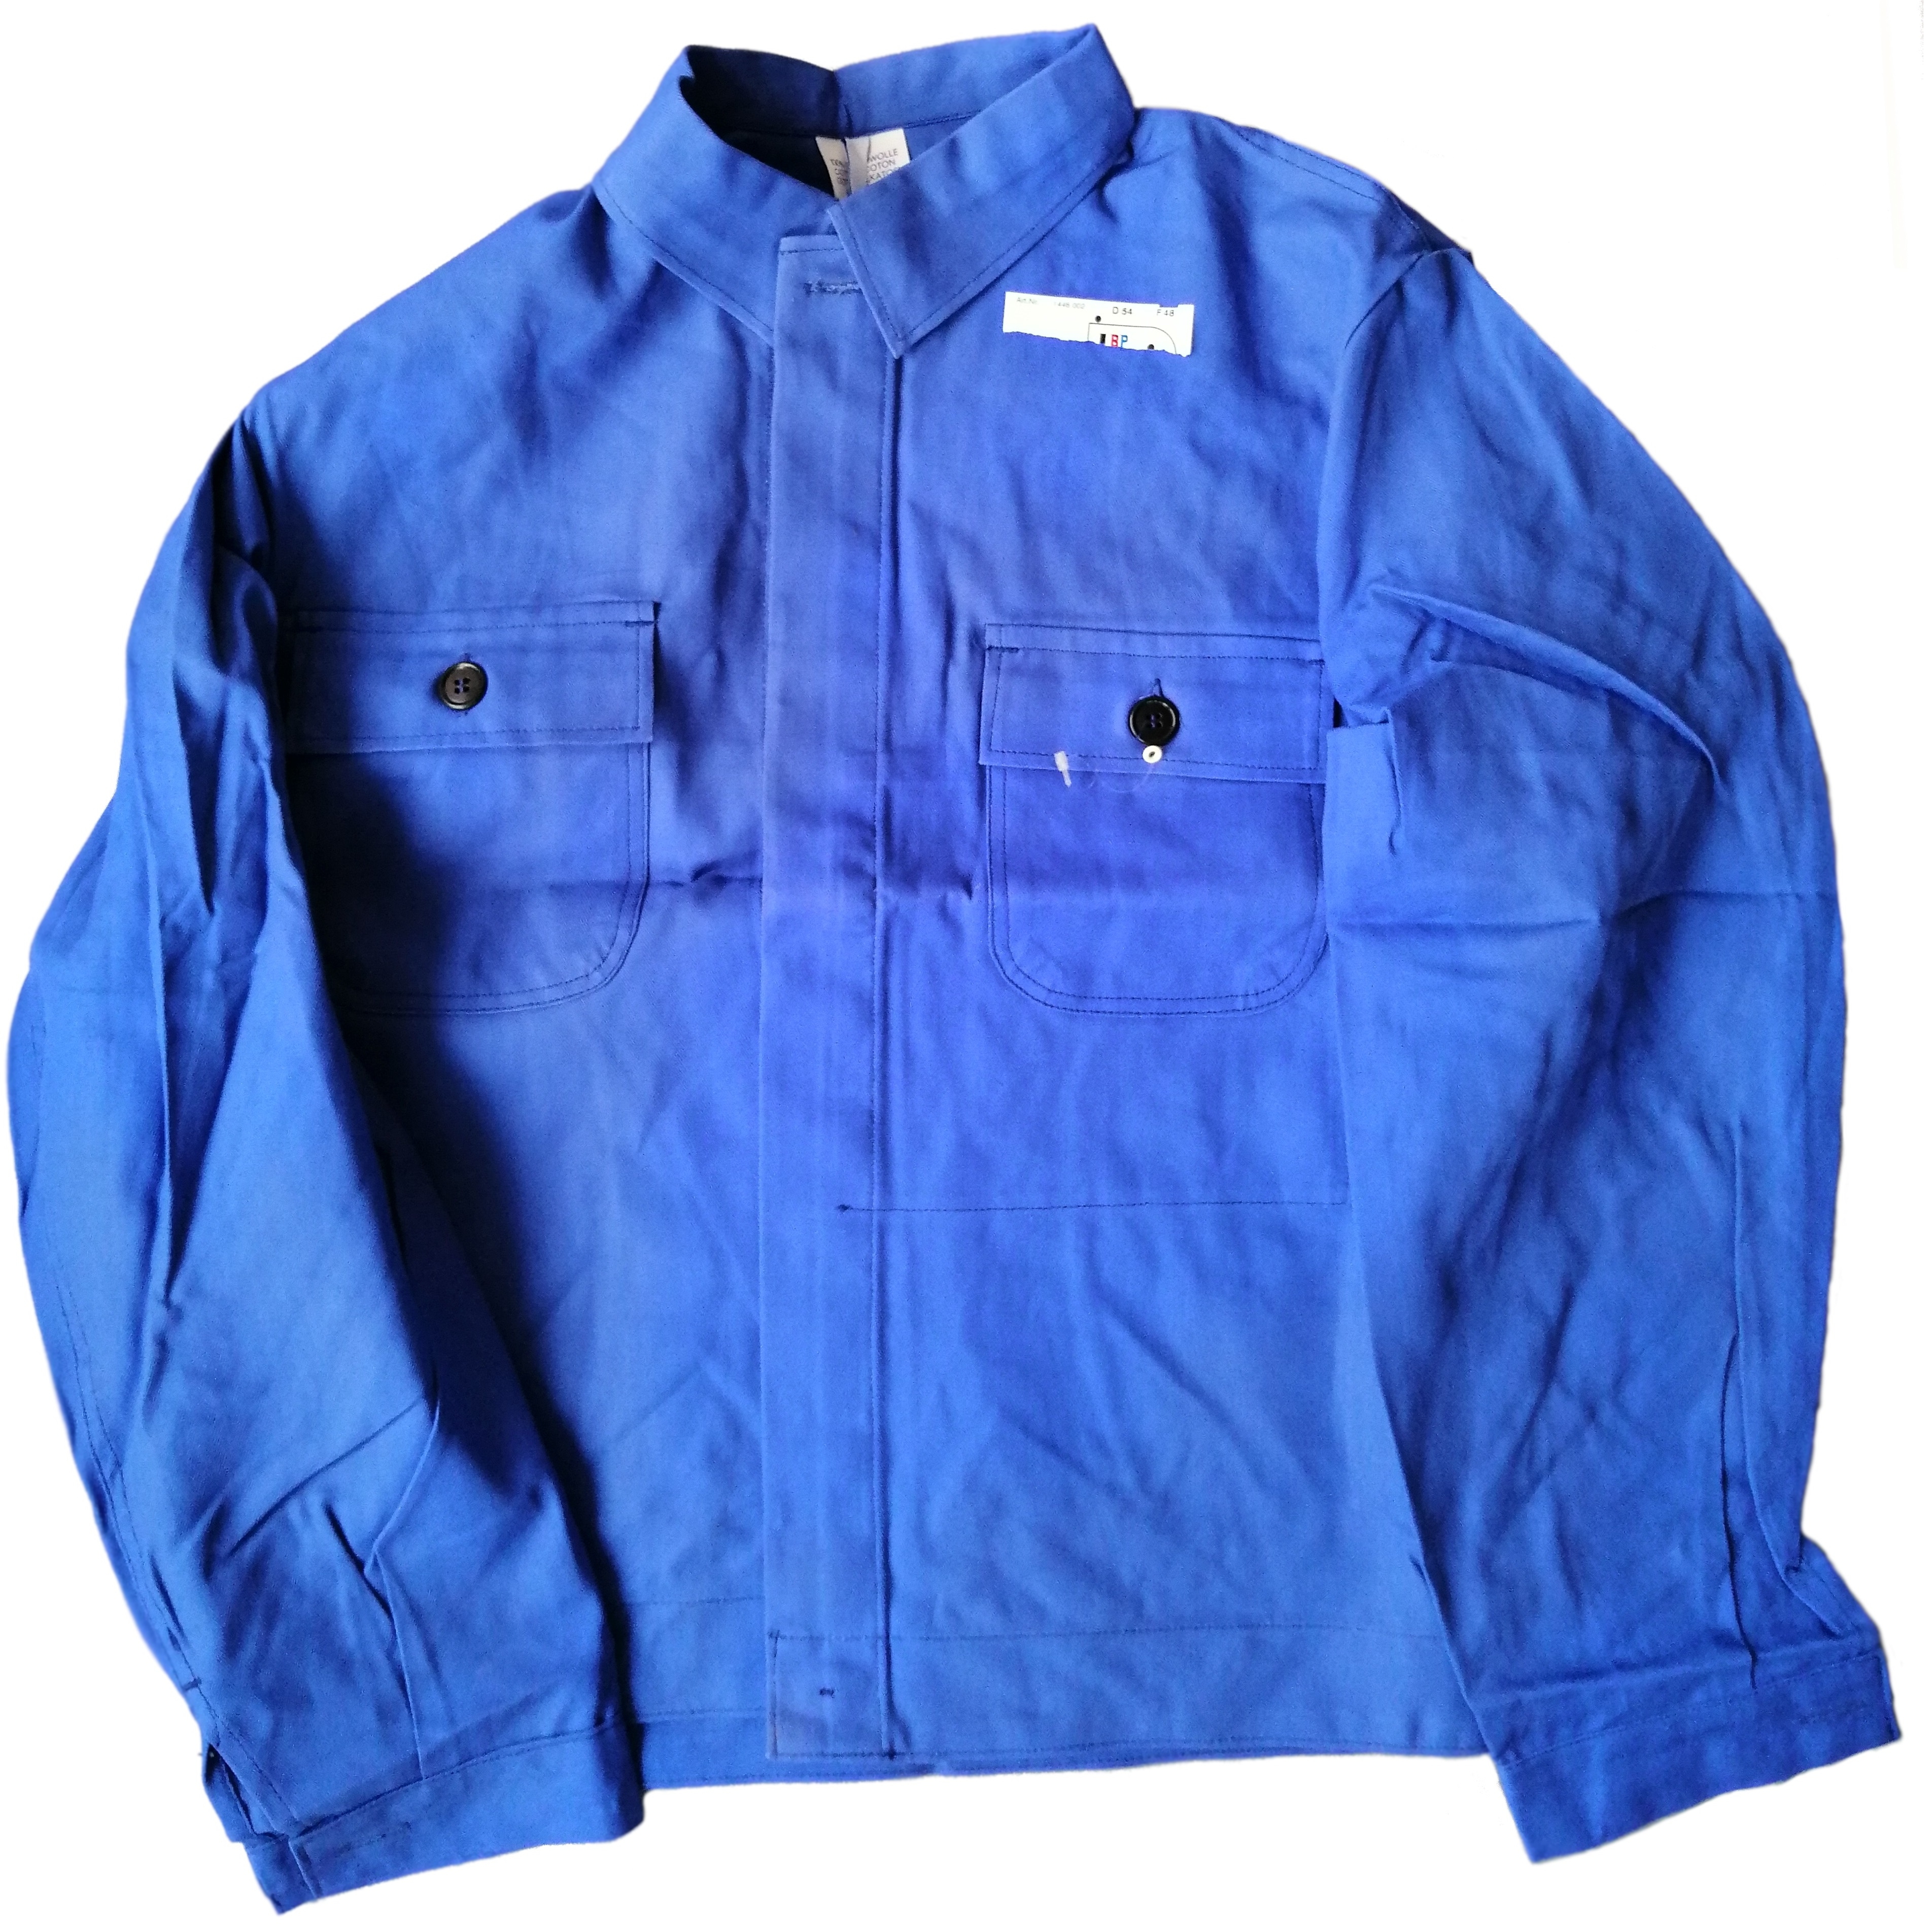 BP Blouson Jacke Arbeitsjacke Bundjacke Berufsjacke Arbeitskleidung Berufskleidung Basic kornblau